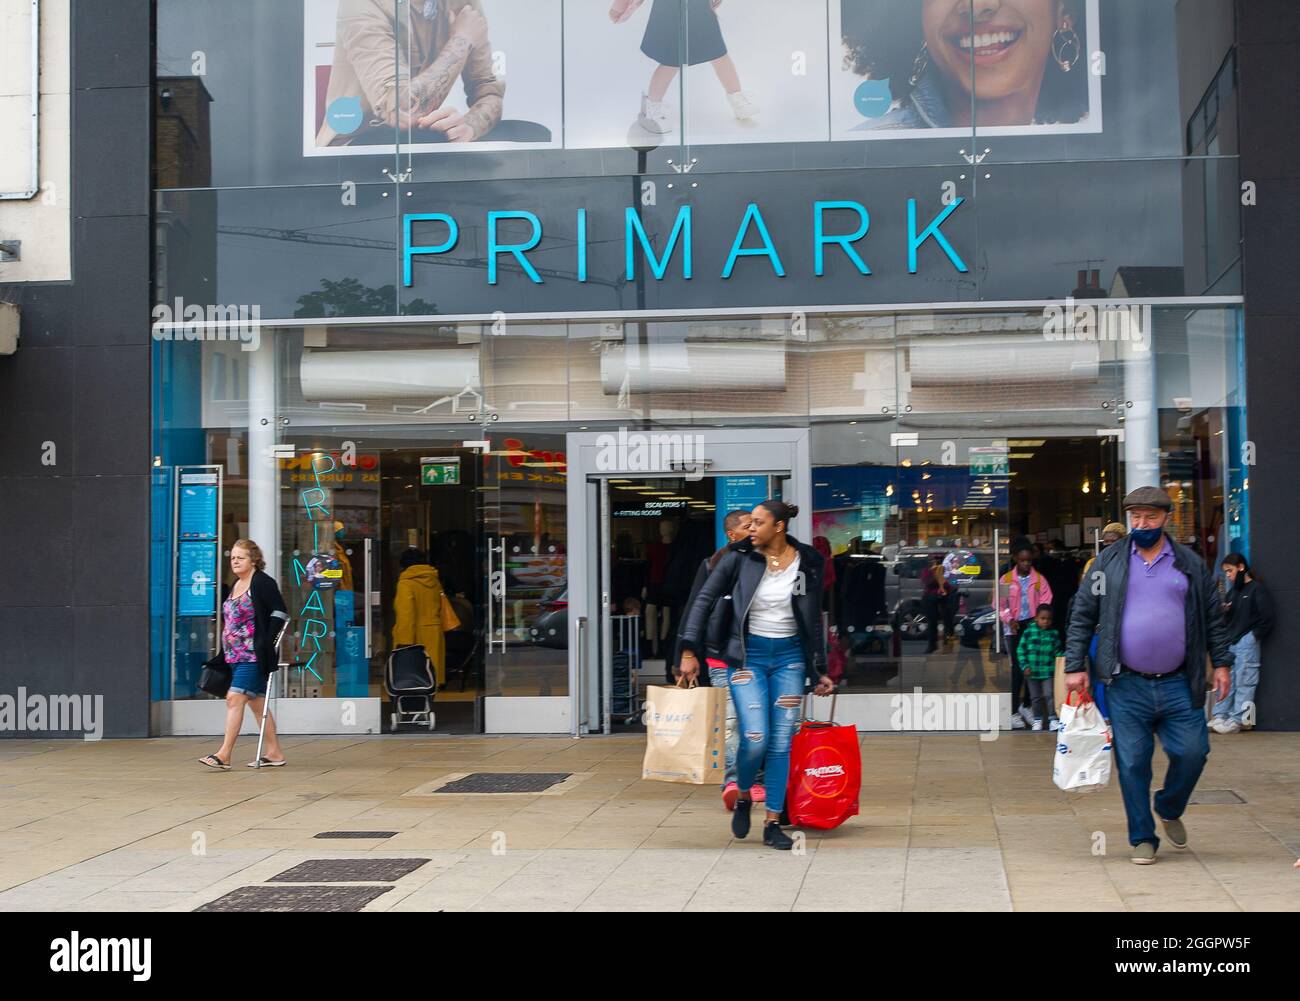 Uxbridge, London Borough of Hillingdon, Großbritannien. September 2021.  Einkäufer vor dem Primark-Laden in Uxbridge. Quelle: Maureen McLean/Alamy  Stockfotografie - Alamy